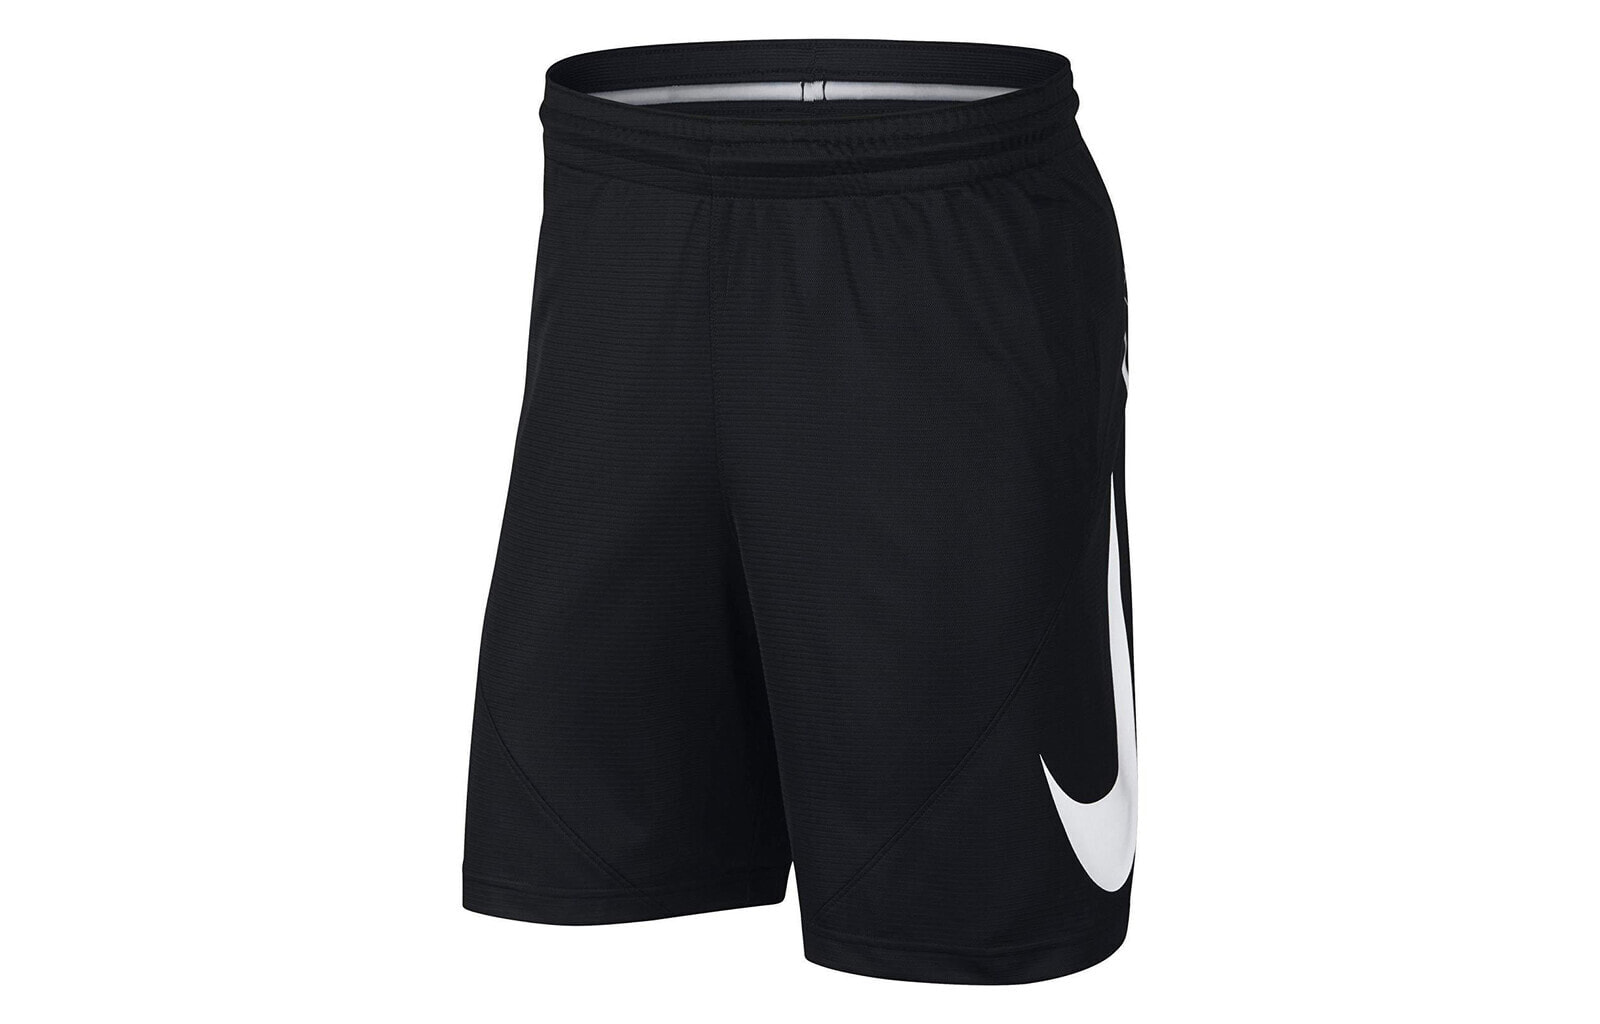 Nike Black Dri-fit 9 Inch Basketball Shorts 黑白大钩子短裤速干篮球裤 男款 黑色 / Брюки Nike Dri-Fit 9 910704-010